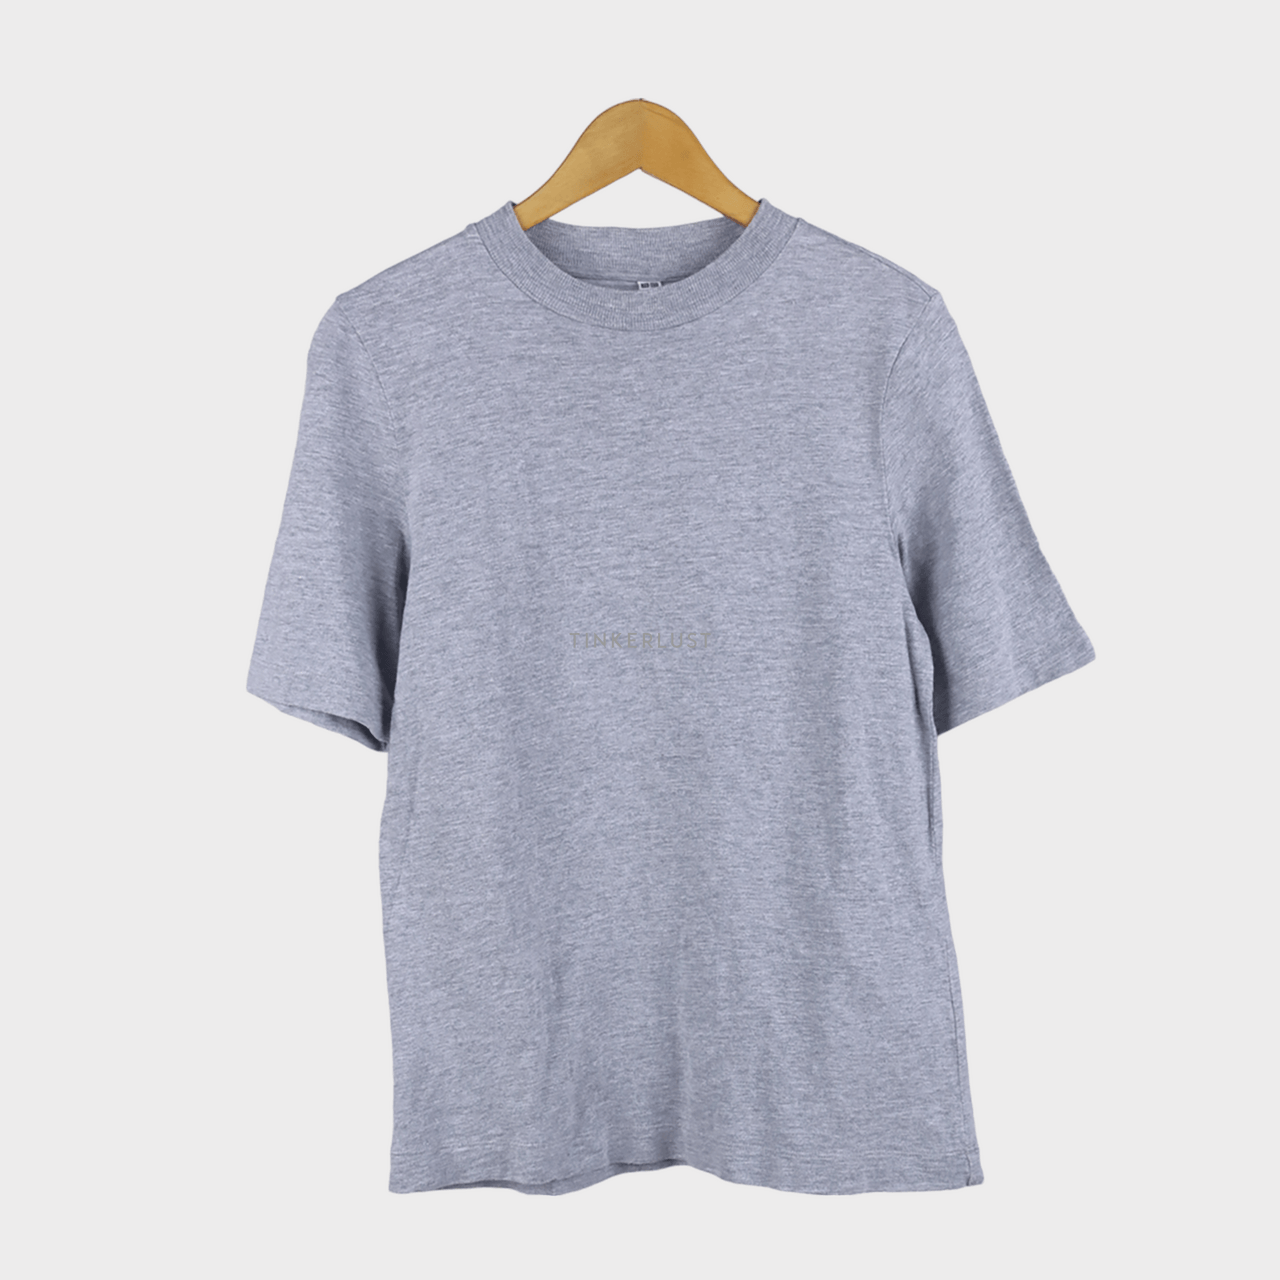 UNIQLO Grey T-Shirt